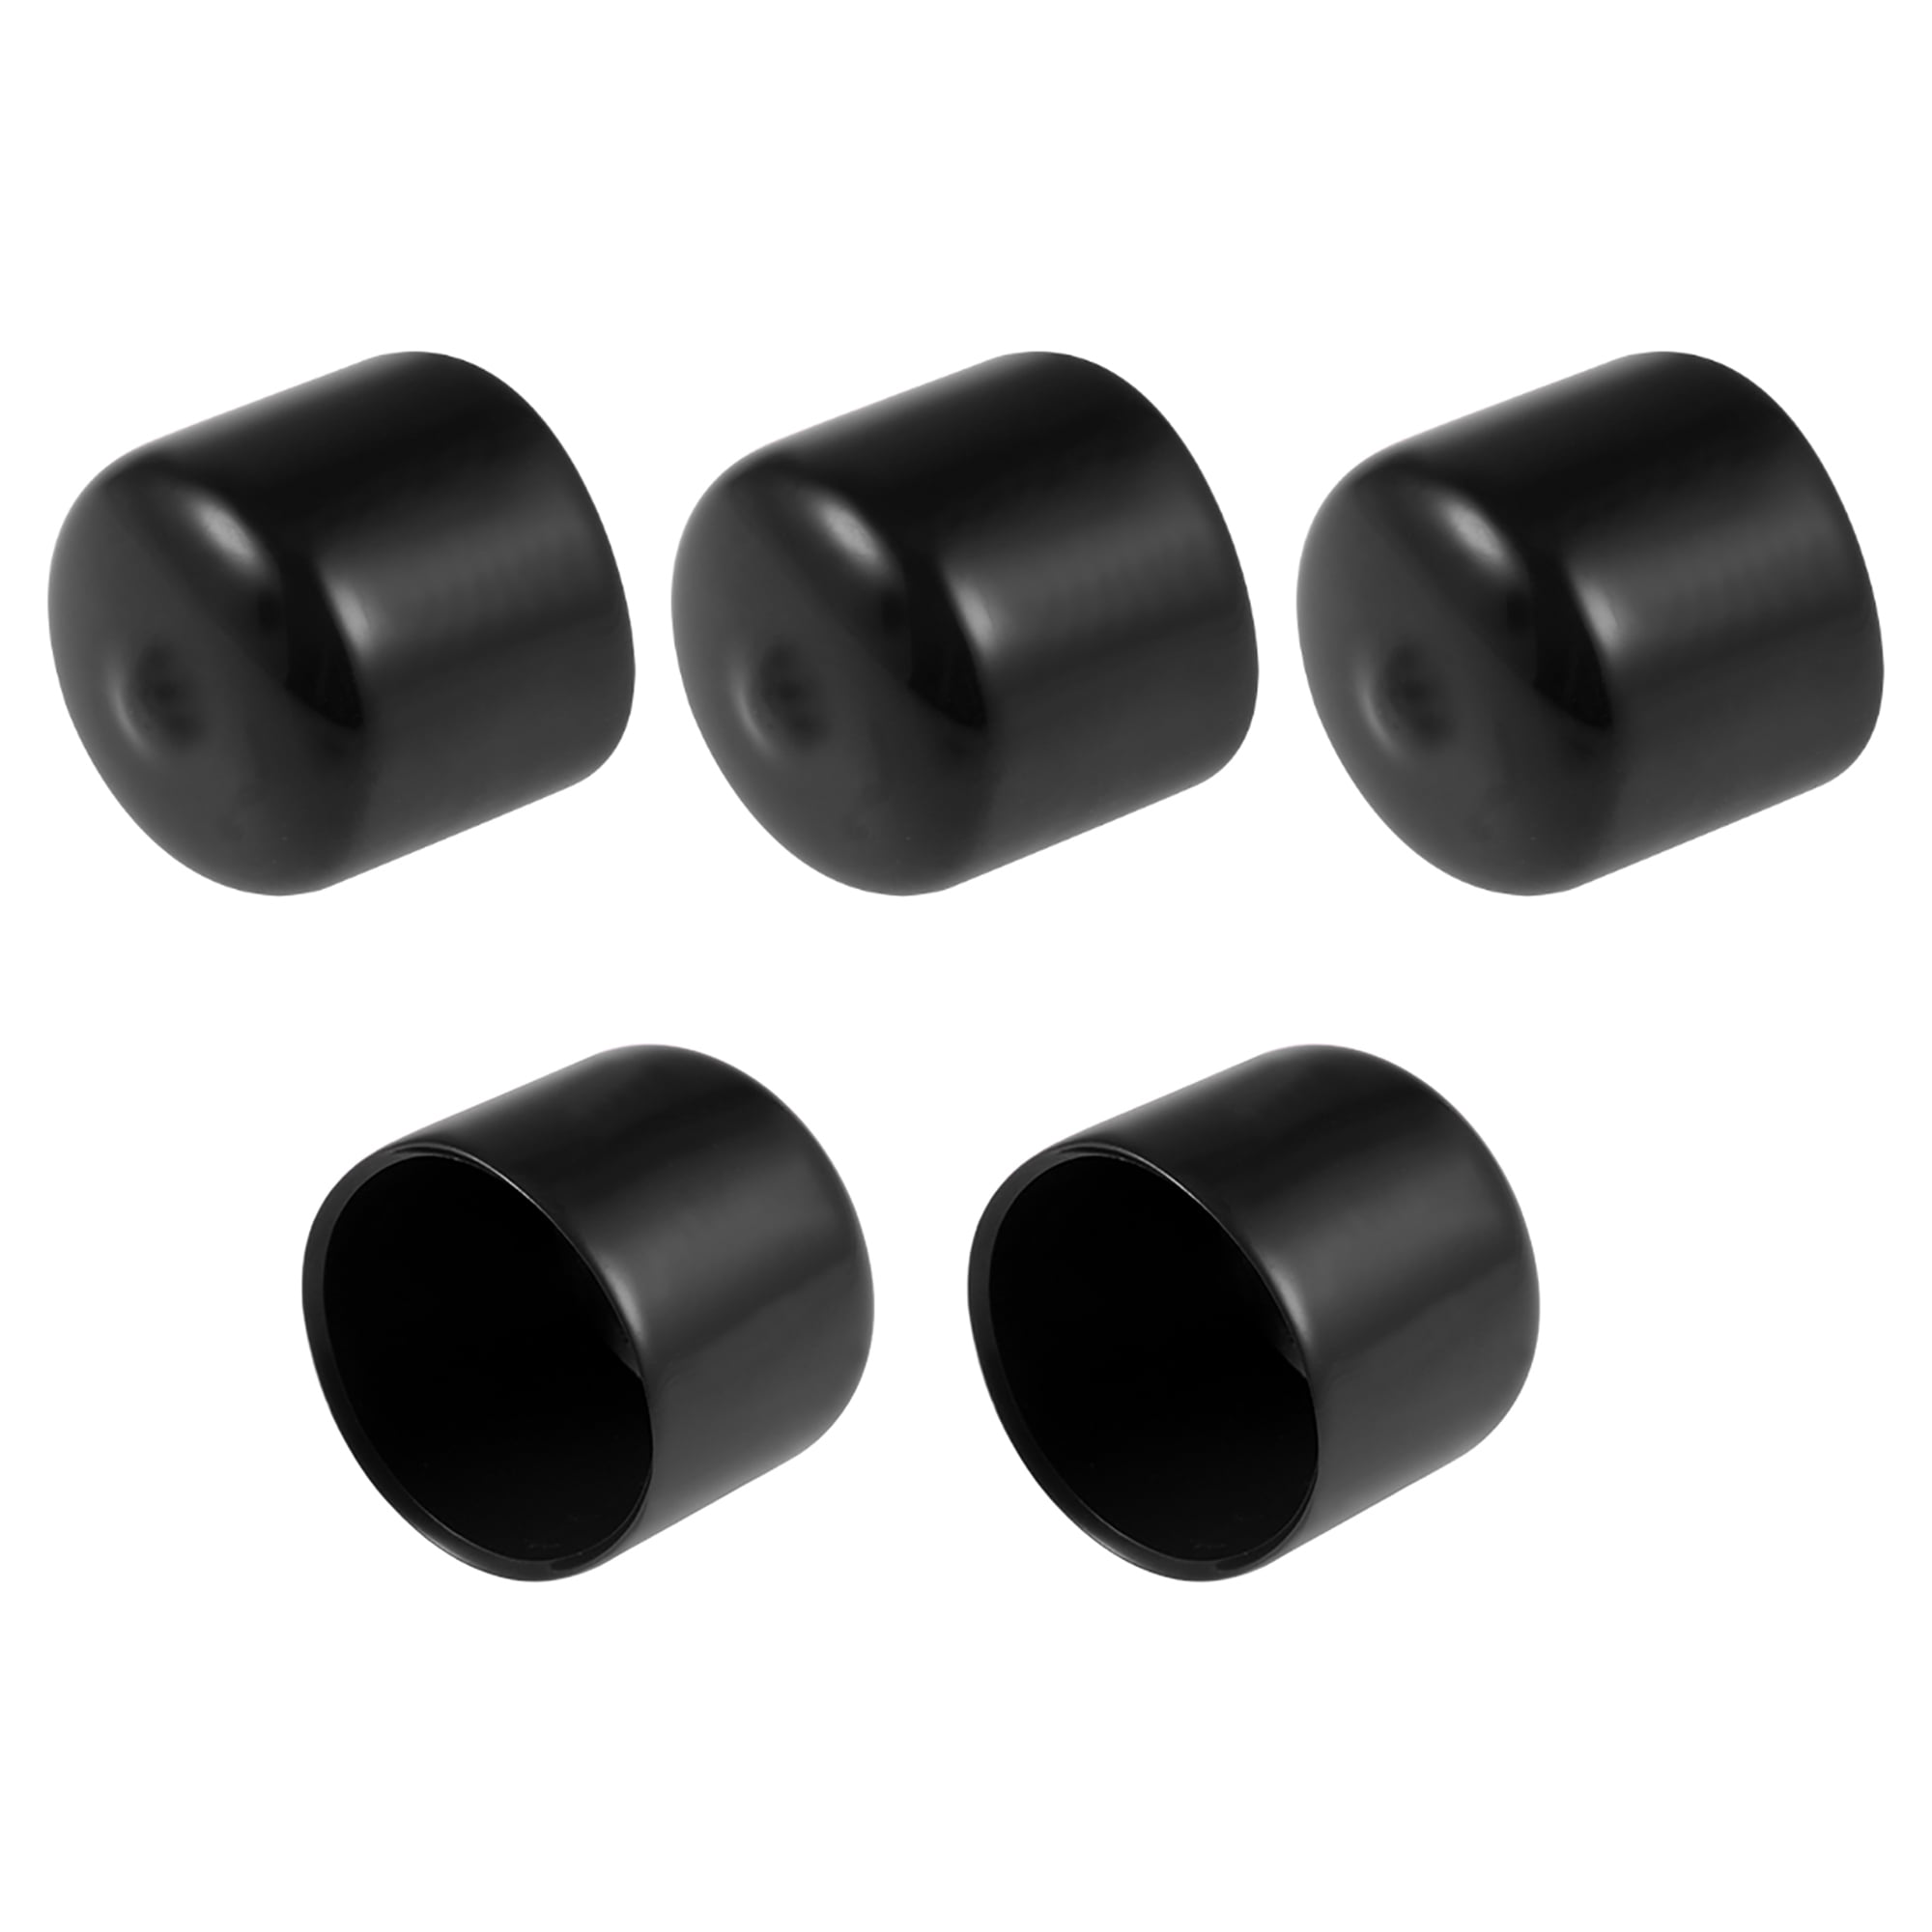 TEHAUX 700pcs Rubber End Caps Round Thread Protector Flexible Black Vinyl End Caps for Furniture Pipes Hoses Screws